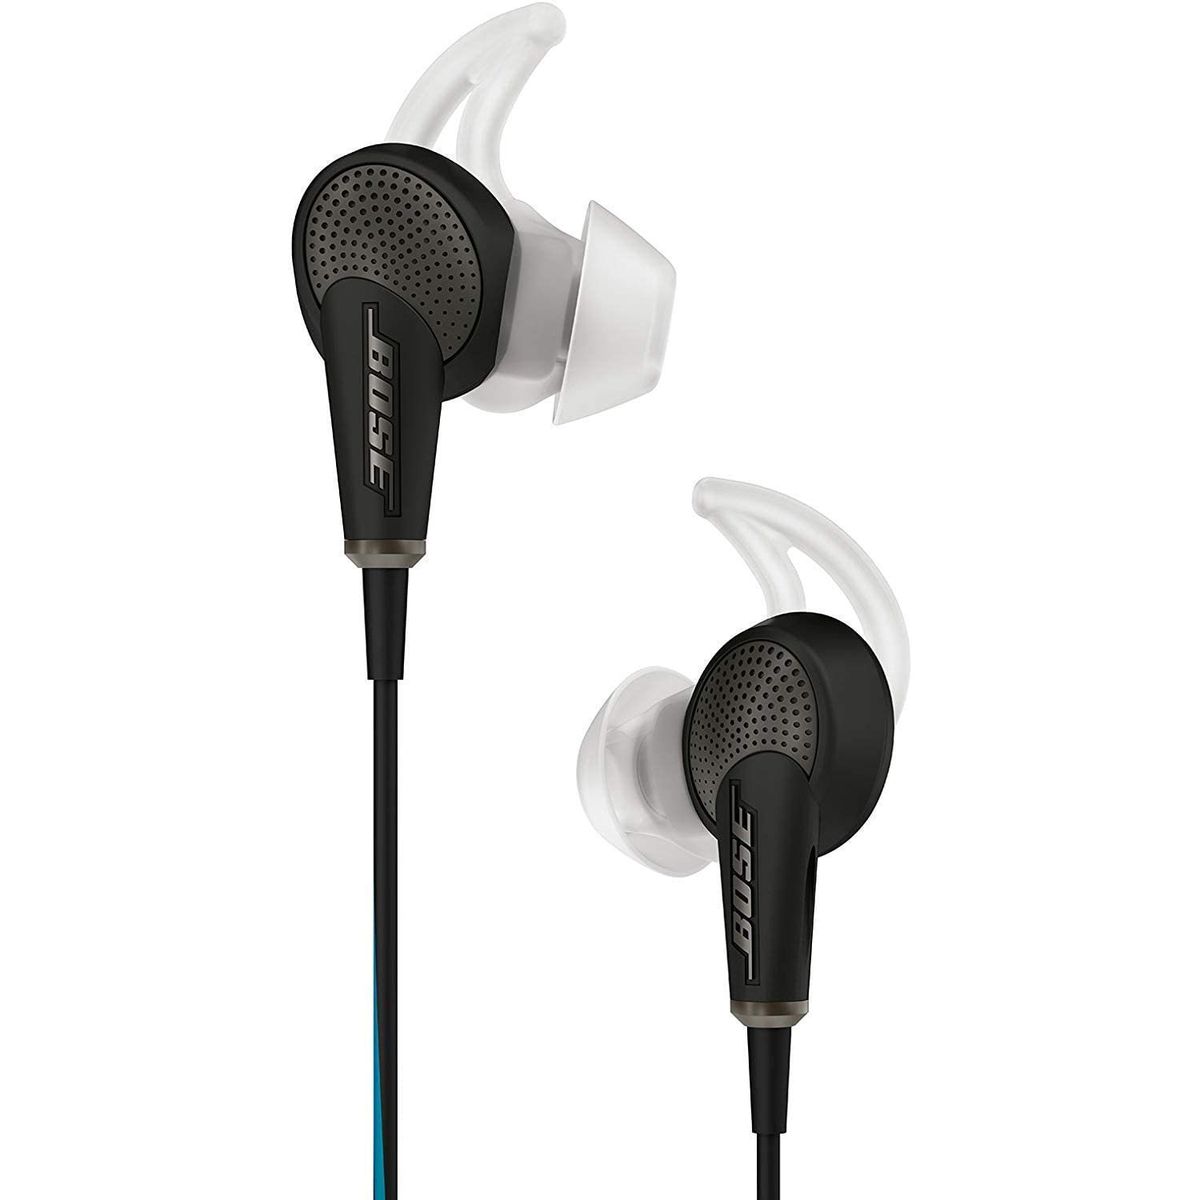 Best Noise-Canceling Earbuds: Bose QuietComfort 20 Acoustic Noise Canceling Headphones